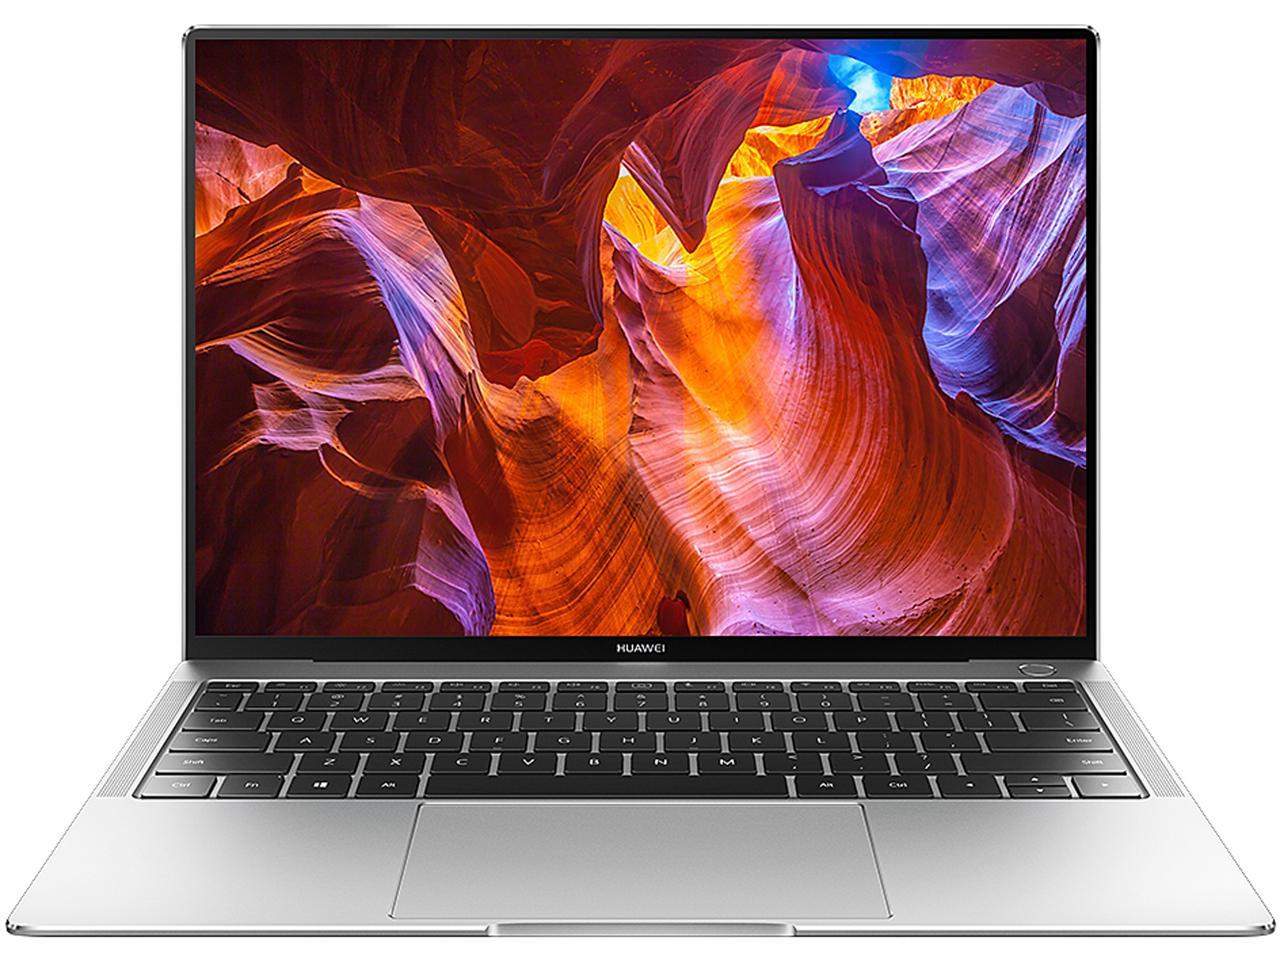 PC/タブレット ノートPC Huawei Laptop MateBook X Pro Intel Core i5 8th Gen 8250U (1.60GHz 